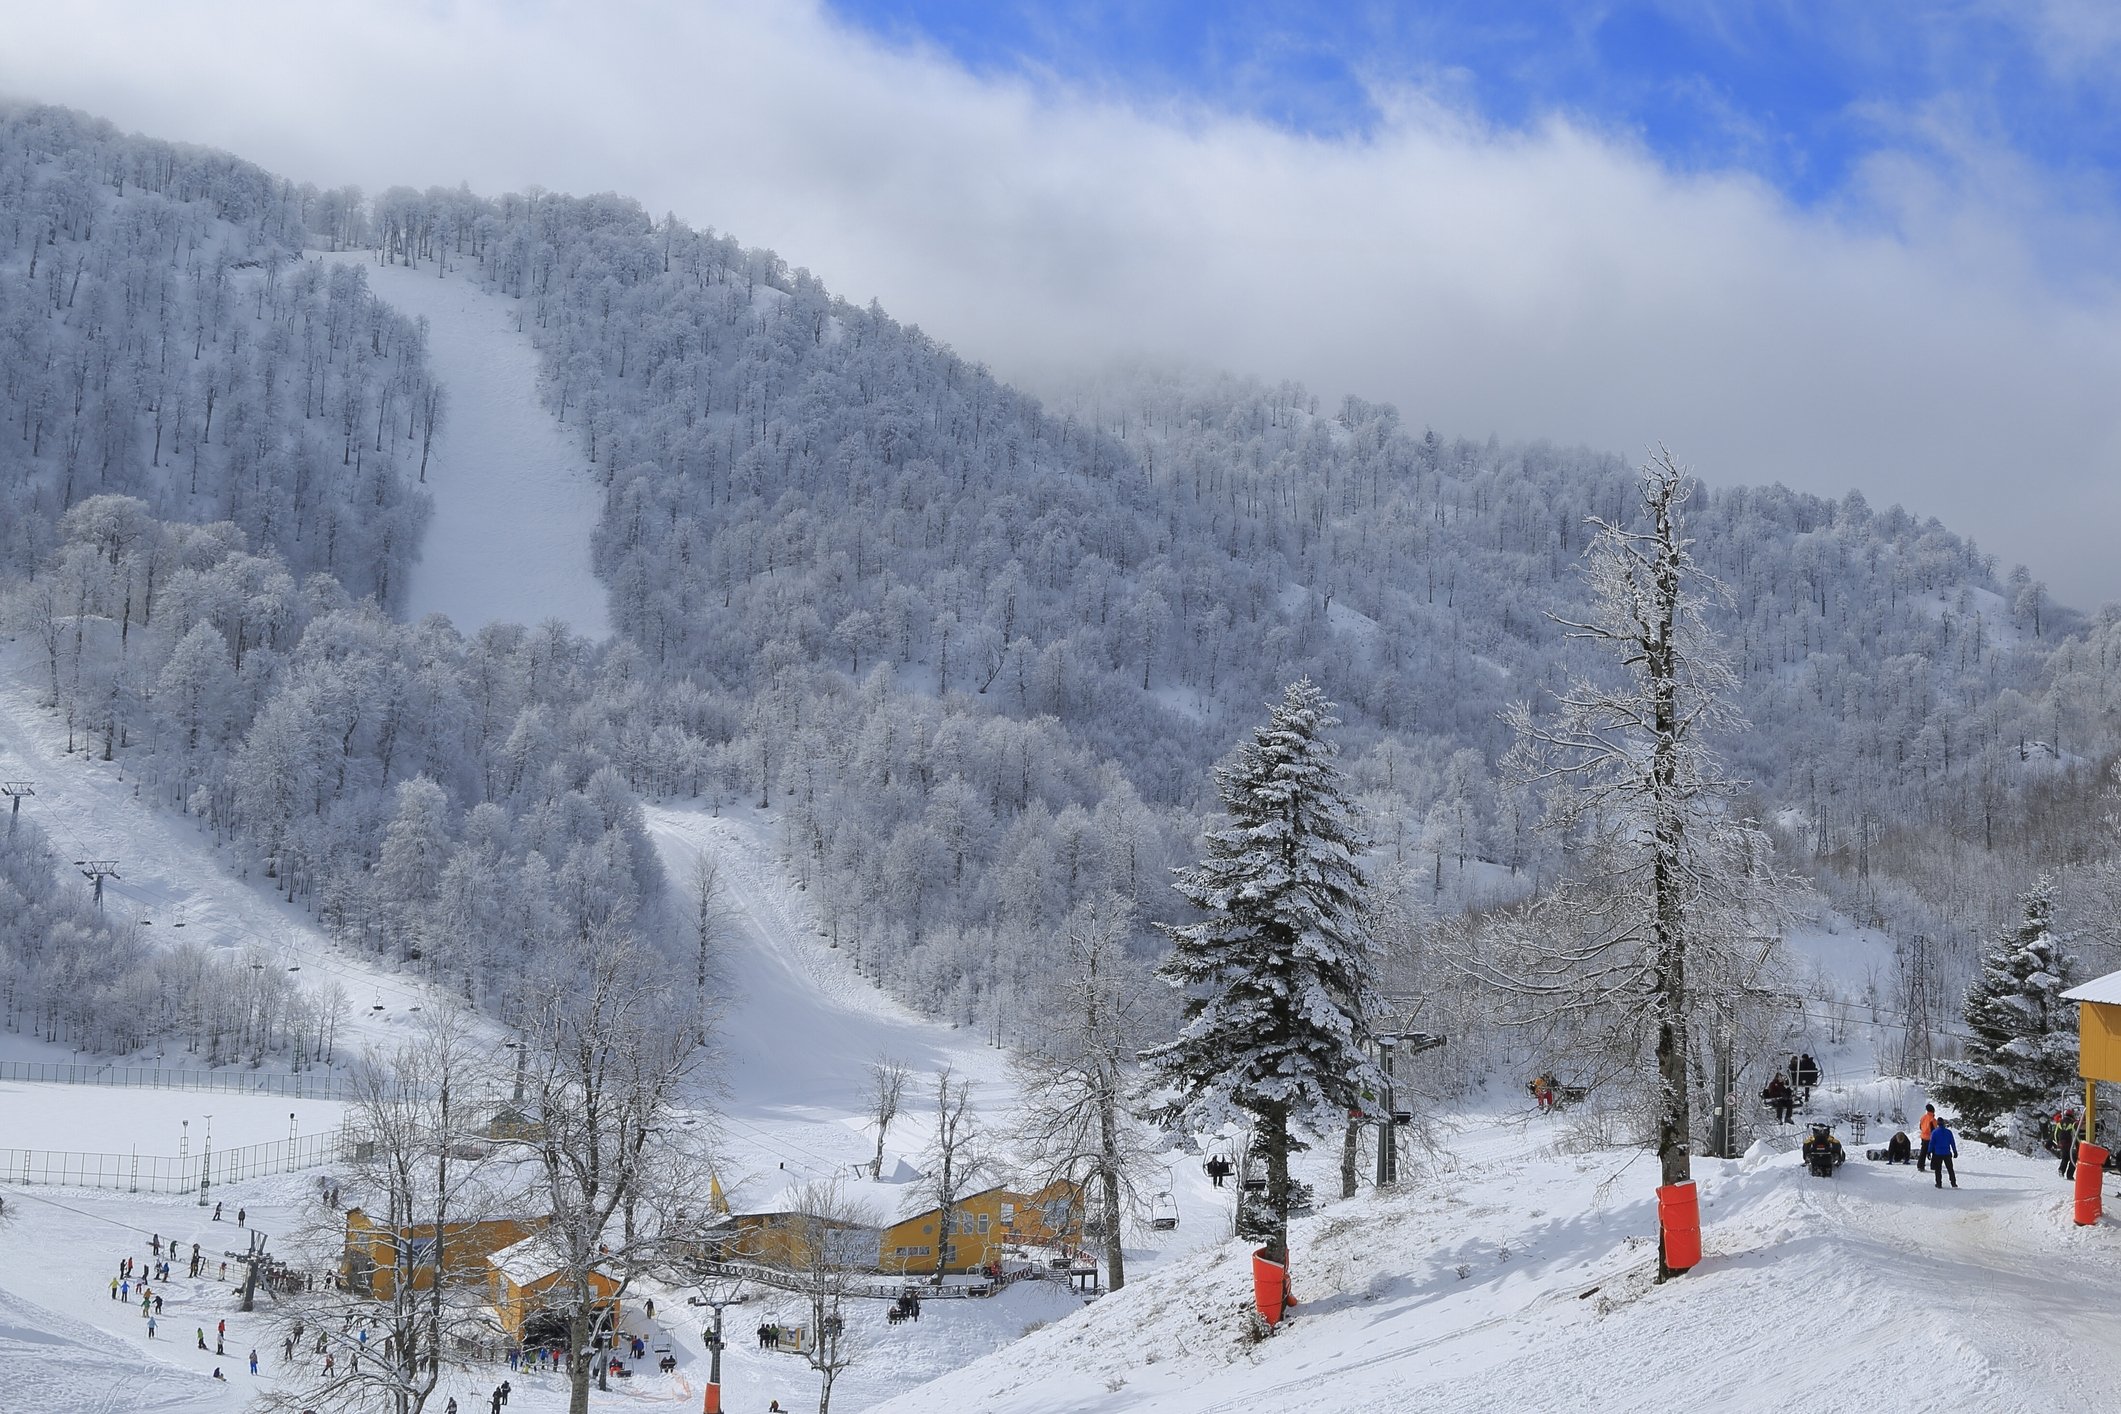 Kartepe ski center and pine trees in Kocaeli province, northwestern Turkey. (iStock Photo)